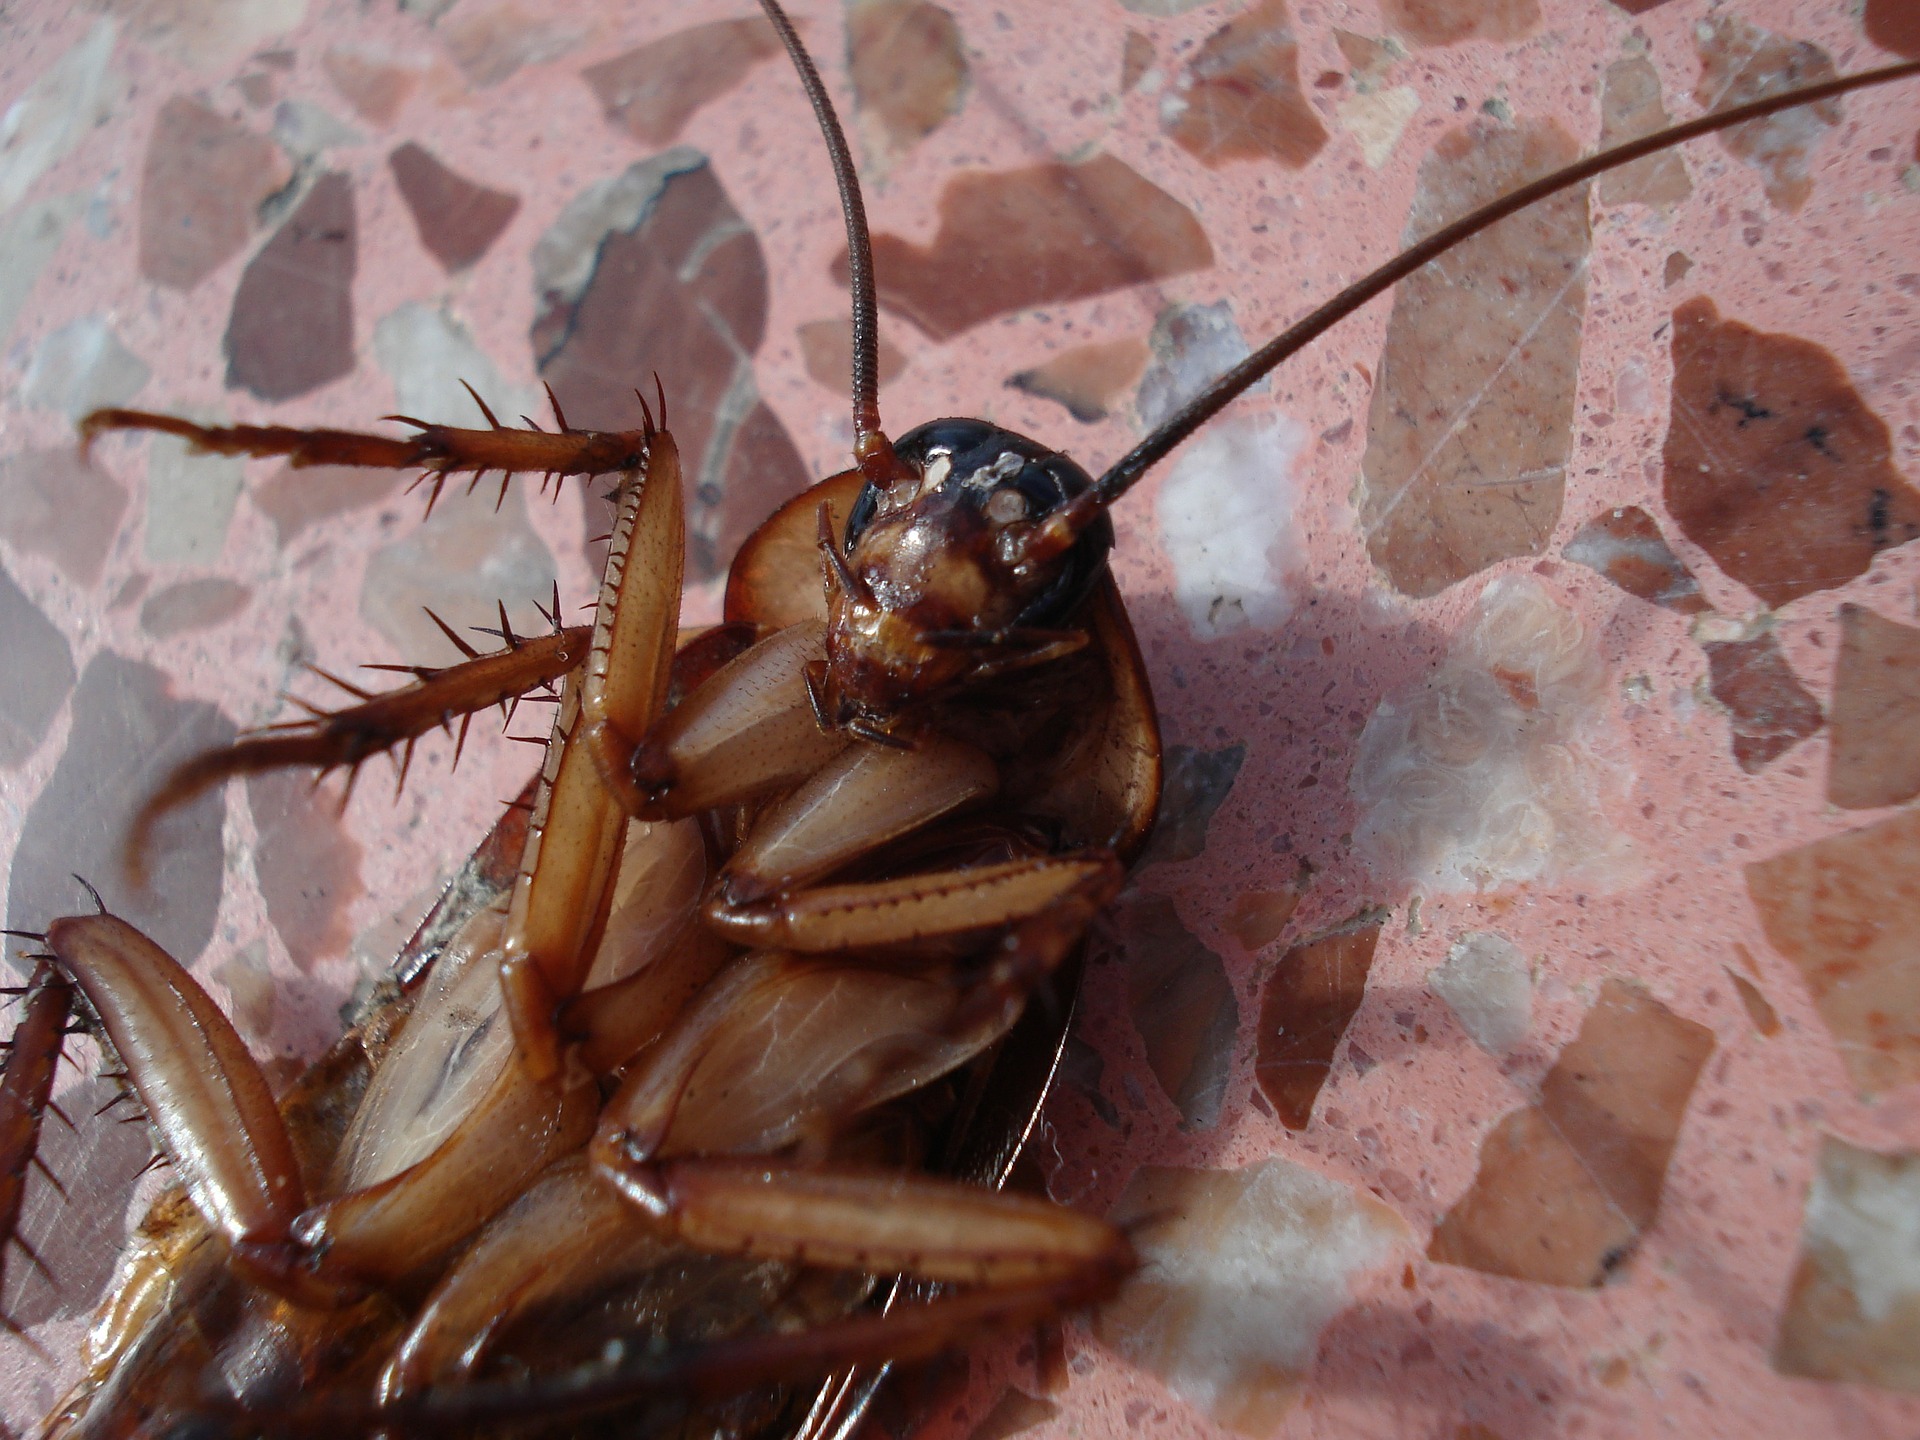 Cockroach treatments in Tilehurst